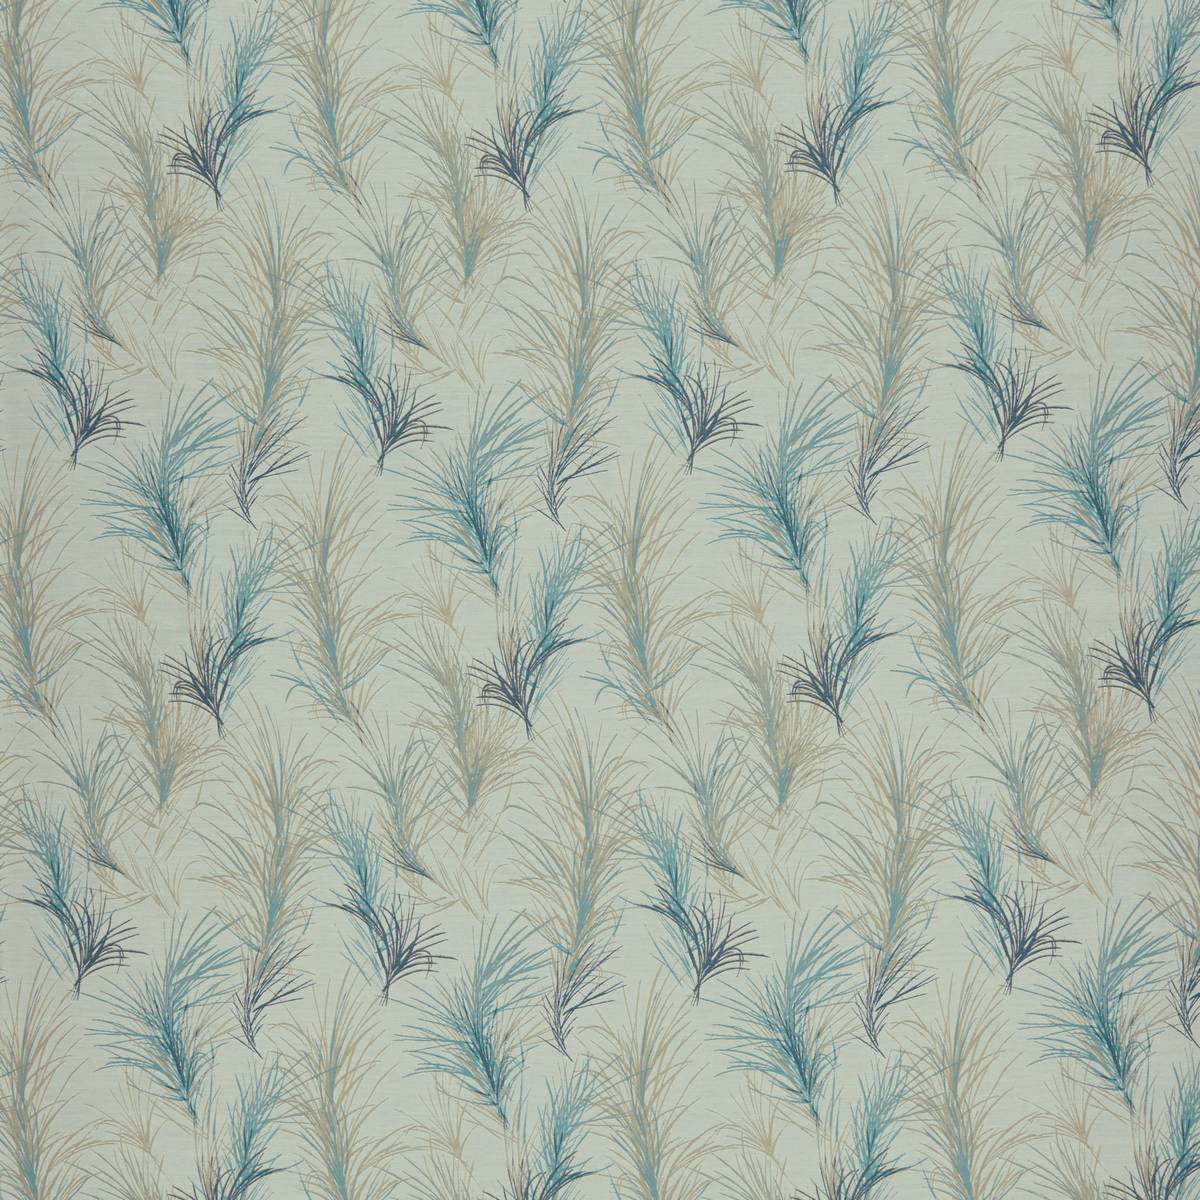 Feather Boa Spa Fabric by iLiv